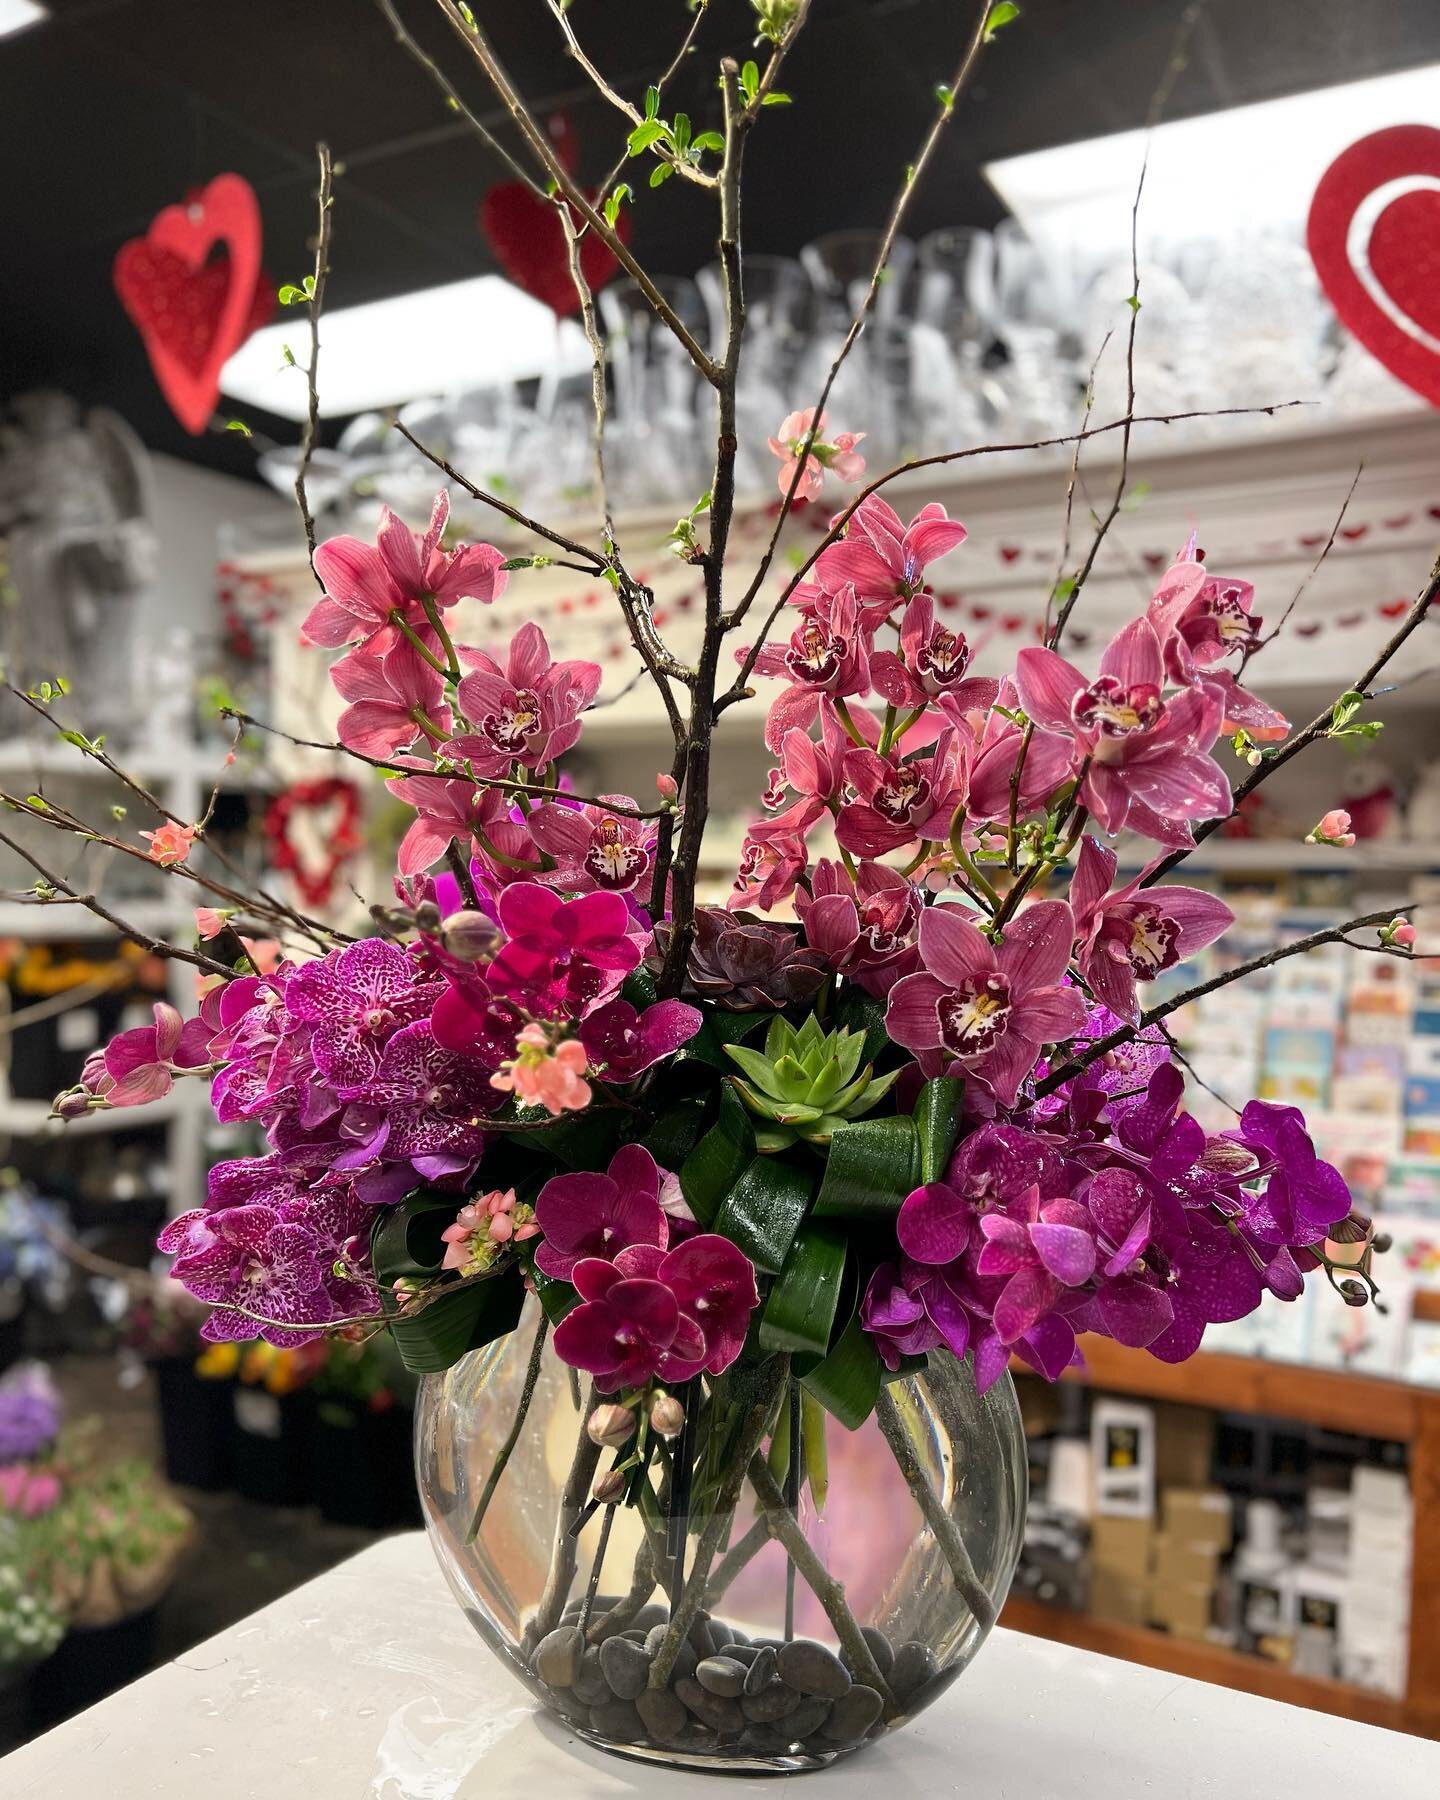 Grateful to be an artist who gets to create art for a living. ❤️
.
#orchids #flowershop #quince #spring #minneapolisflorist #botanicalart #botanicalartist #flowerlovers #plantlover #shoplocal #localartist #gratitude #flowersofinstagram #instaflowers